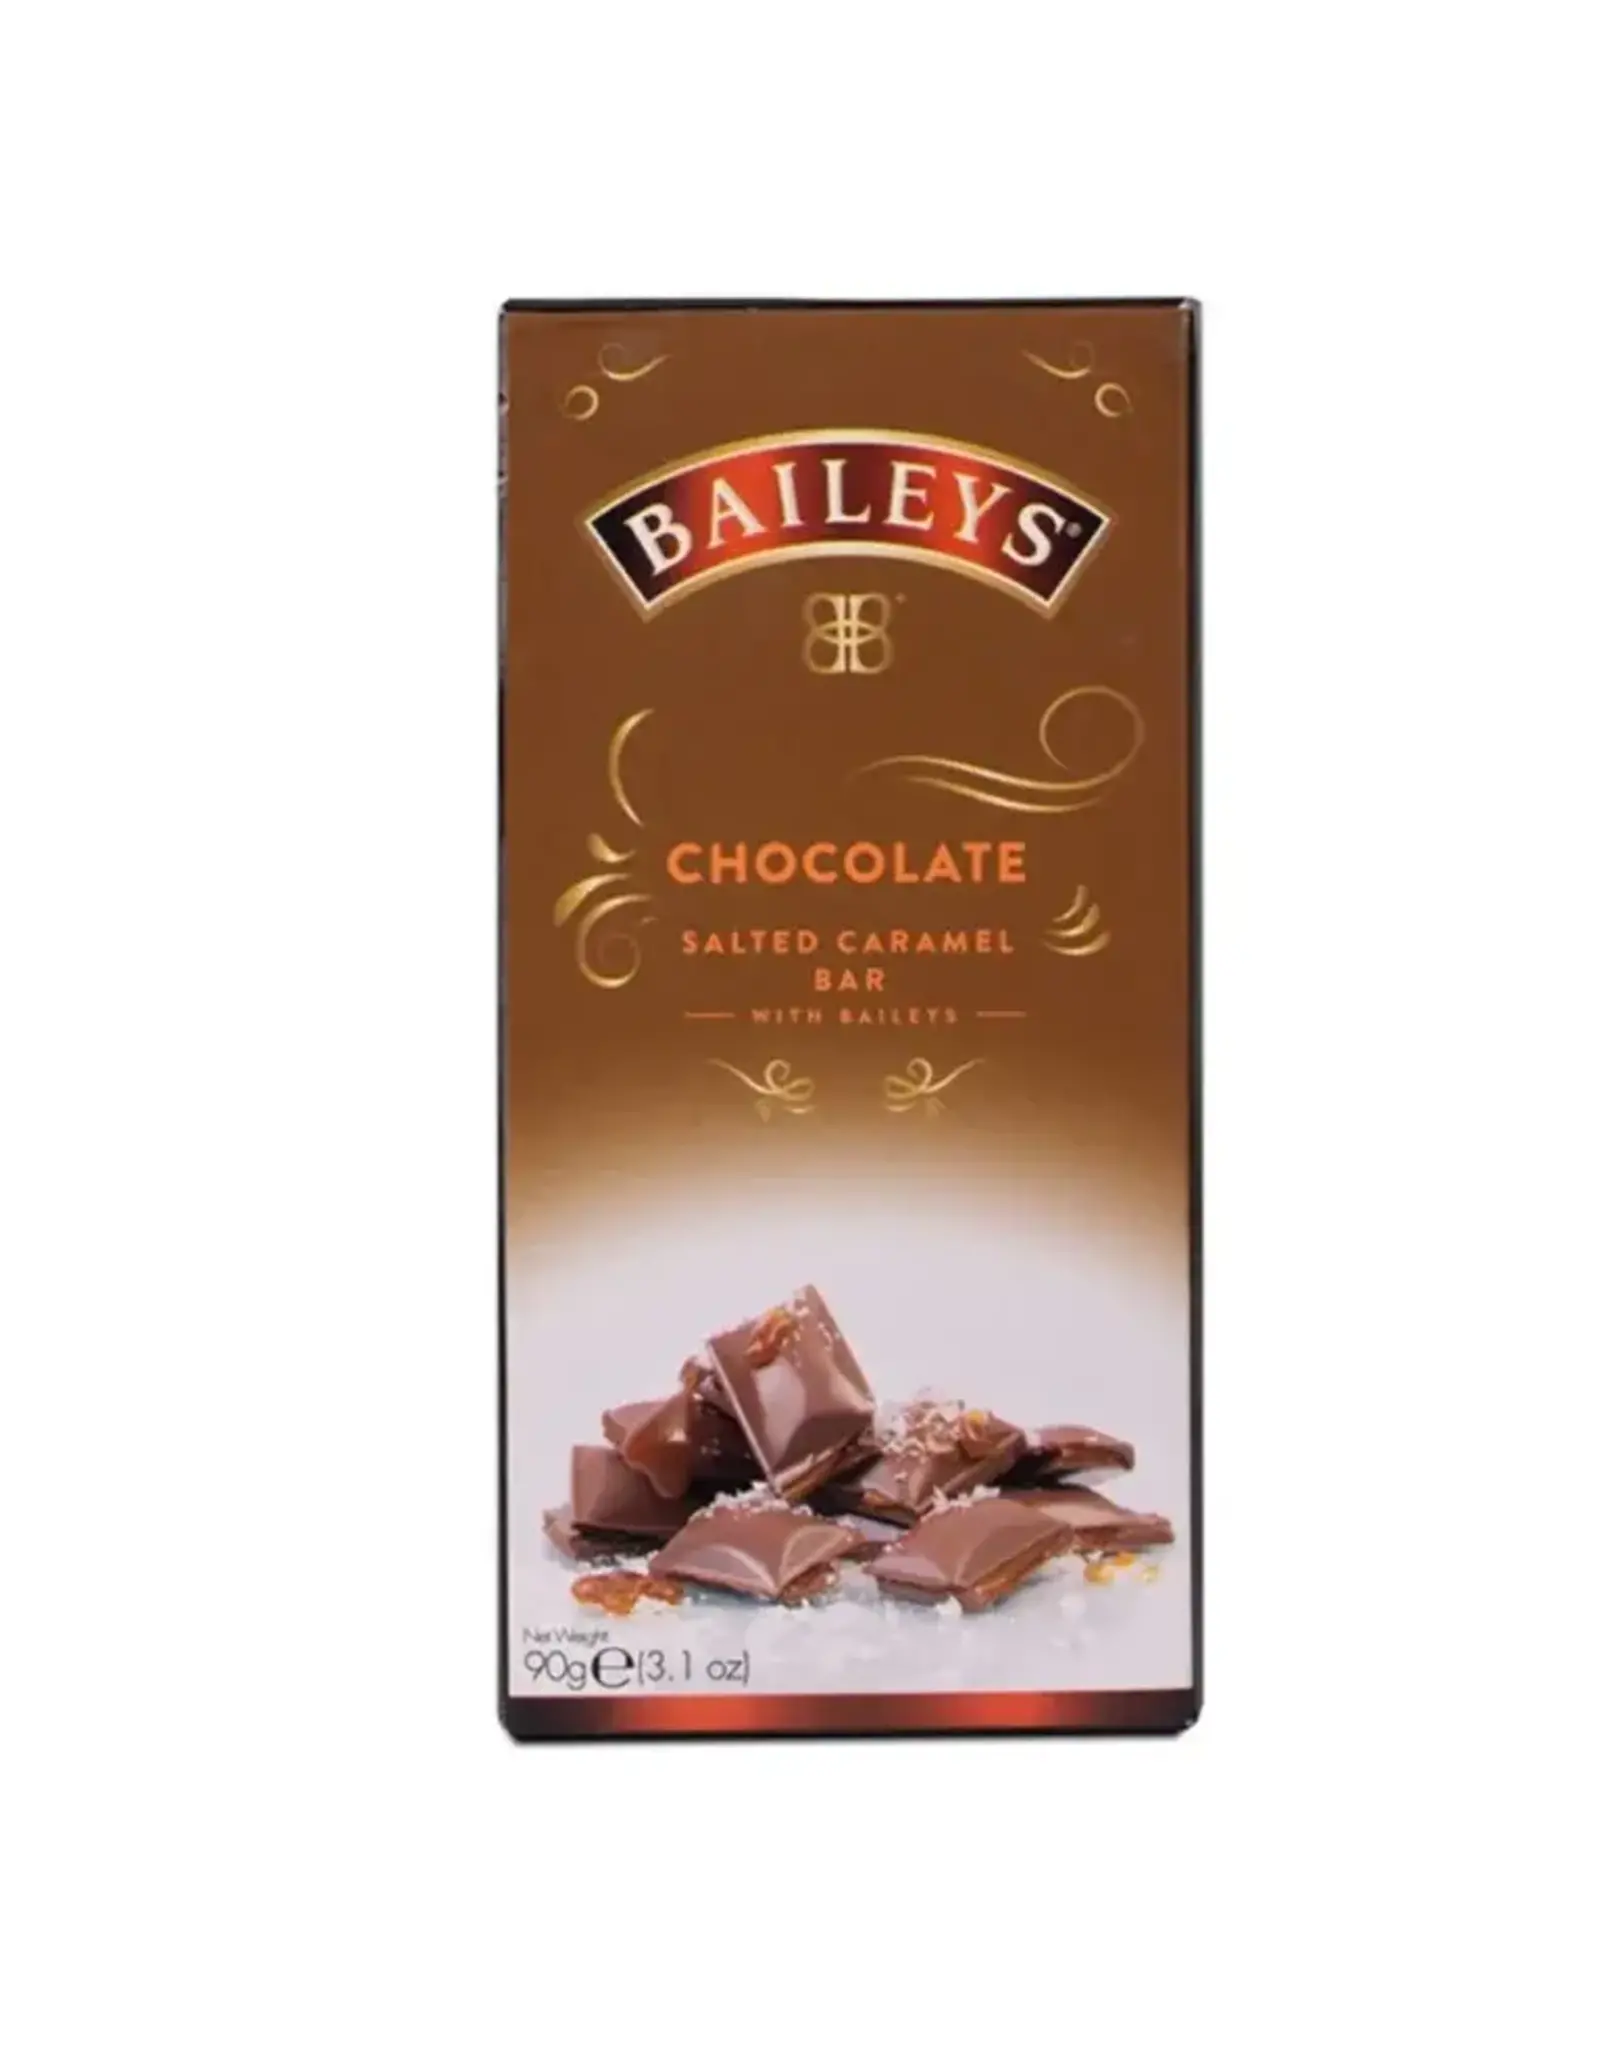 Baileys Chocolate Salted Caramel Bar (British)